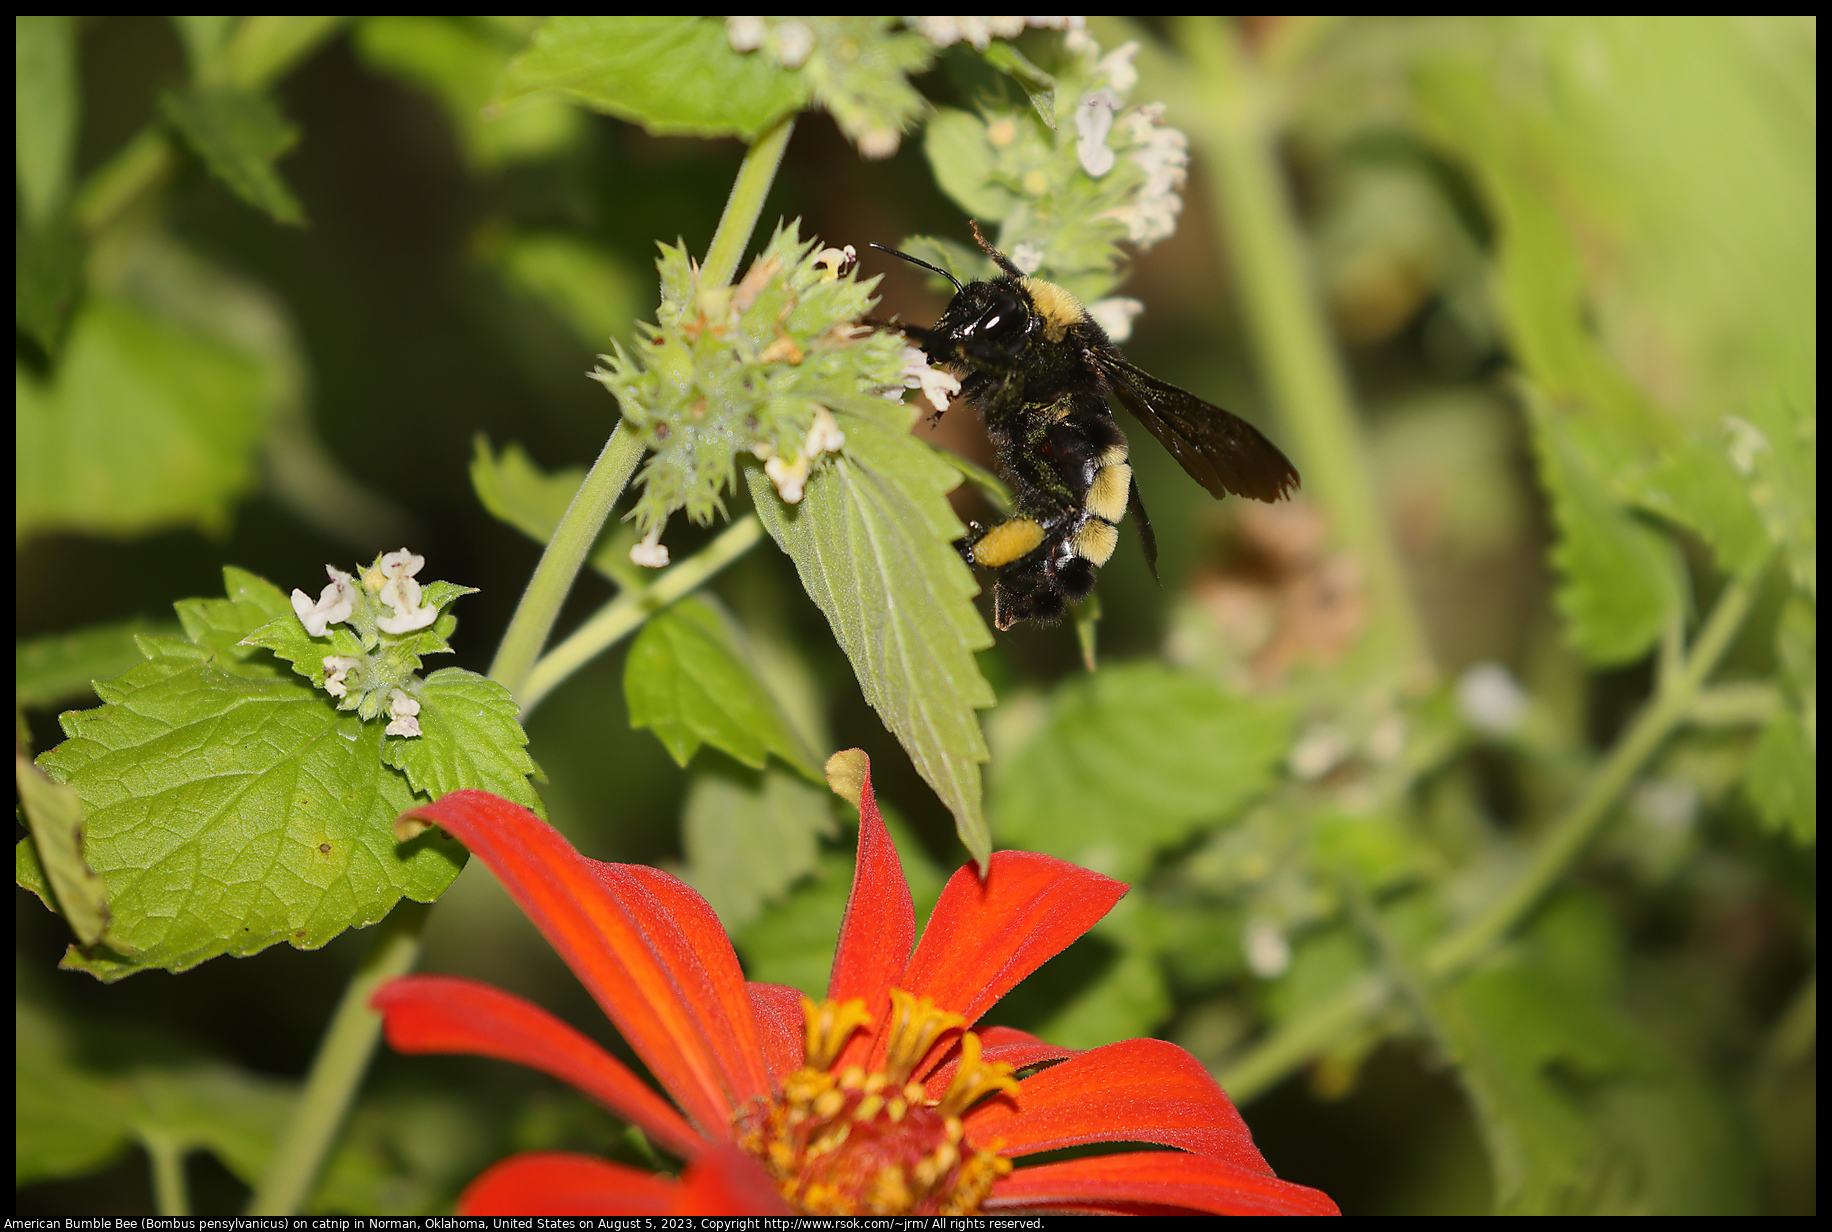 American Bumble Bee (Bombus pensylvanicus) on catnip in Norman, Oklahoma, United States on August 5, 2023